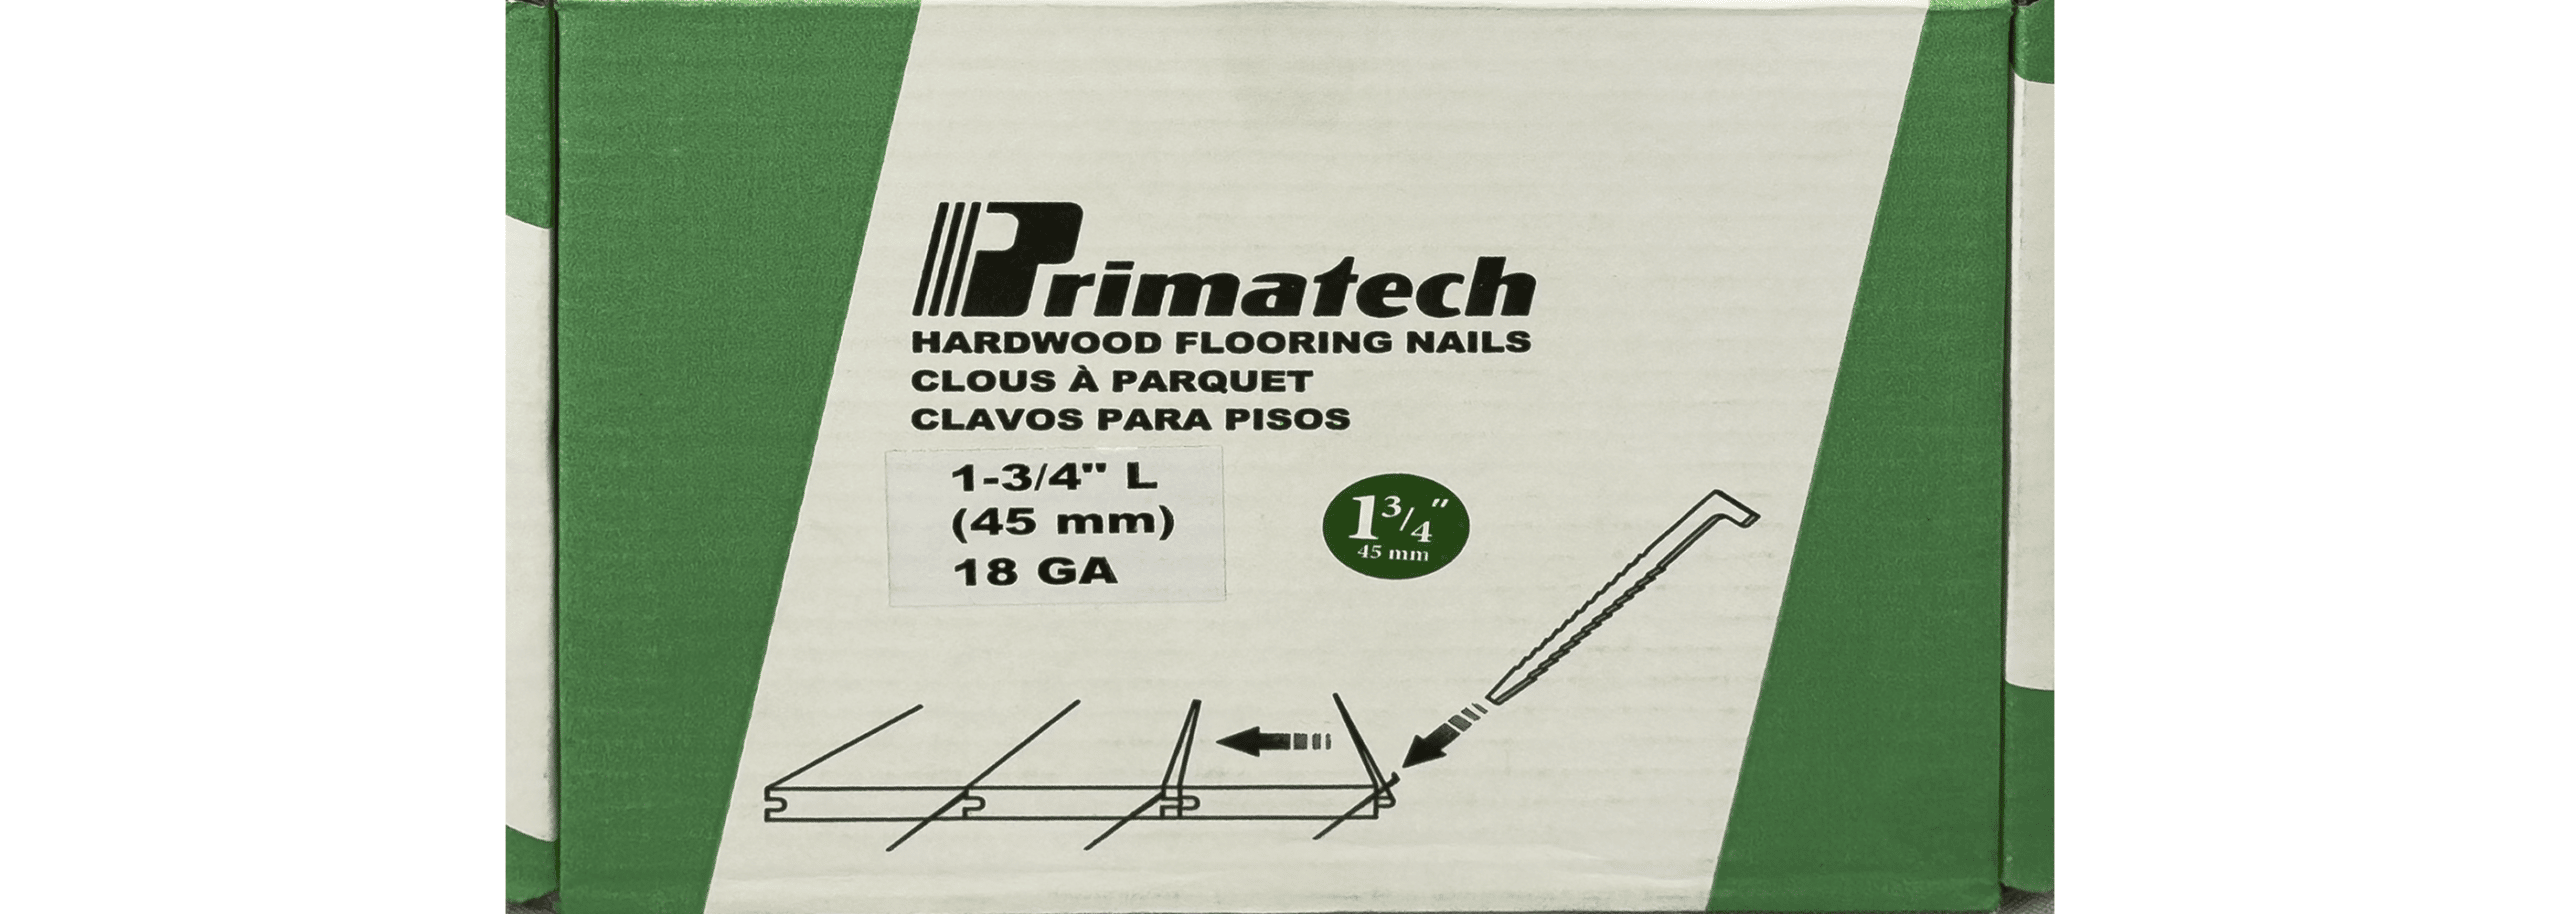 primatech 1-3/4 18g cleats